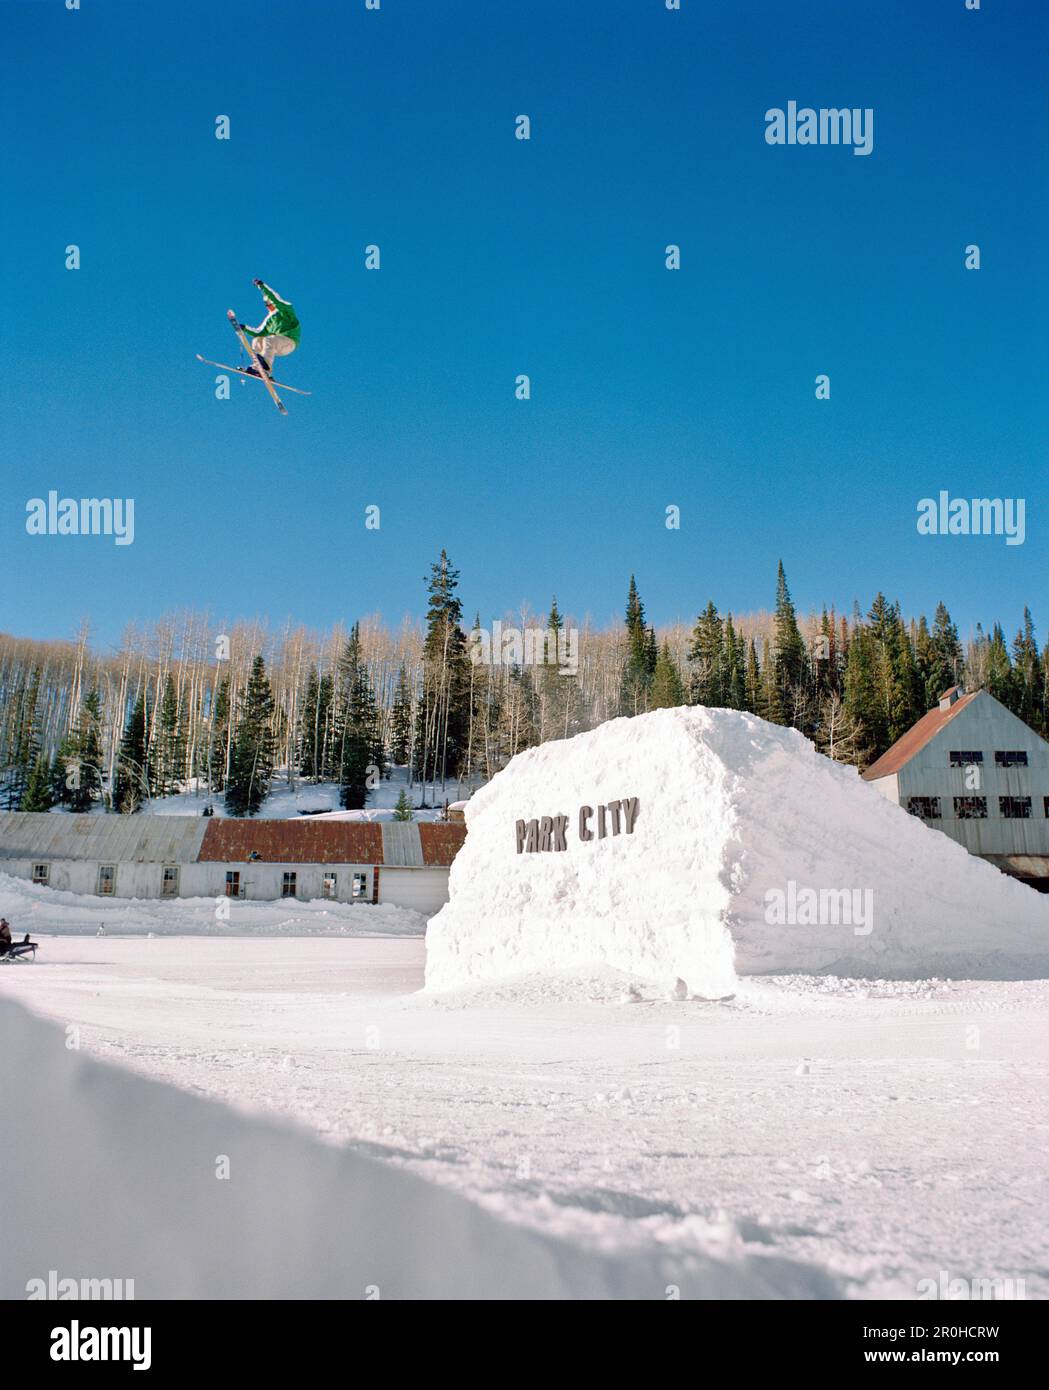 USA, Utah, male skier in midair gap jump, Park City Ski Resort Stock Photo